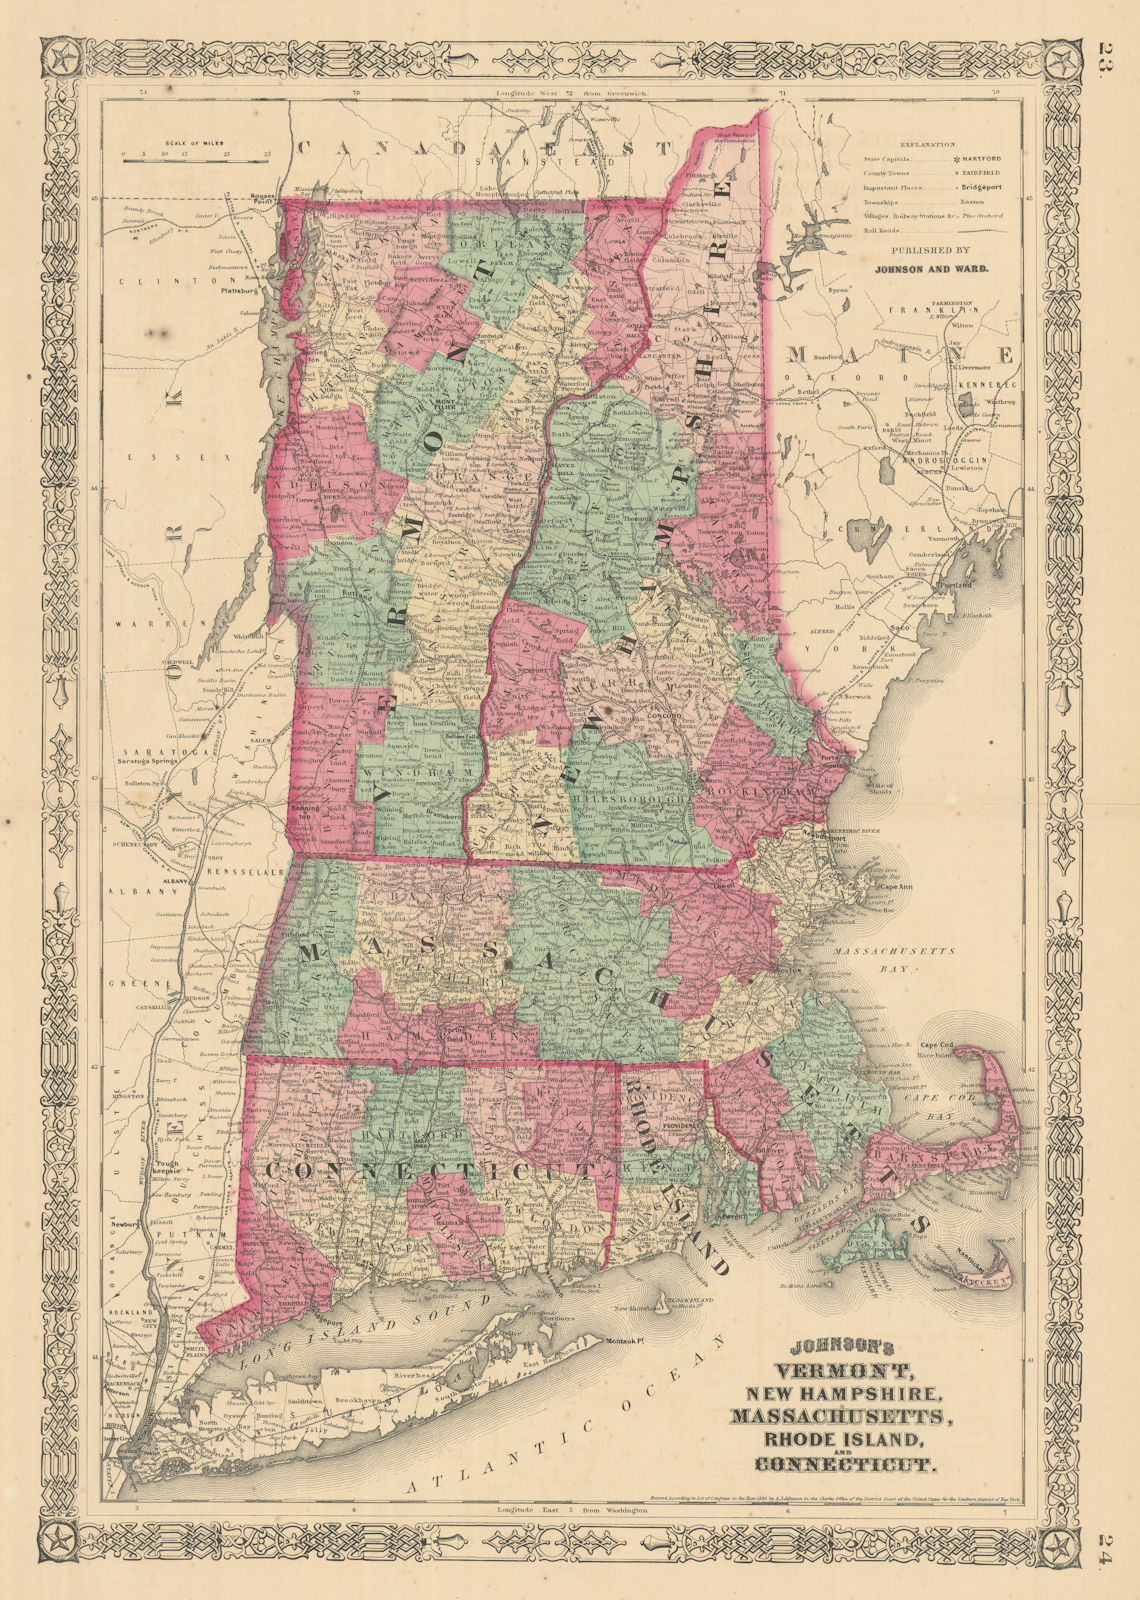 Associate Product Johnson's Vermont New Hampshire Massachusetts Rhode Island Connecticut 1866 map